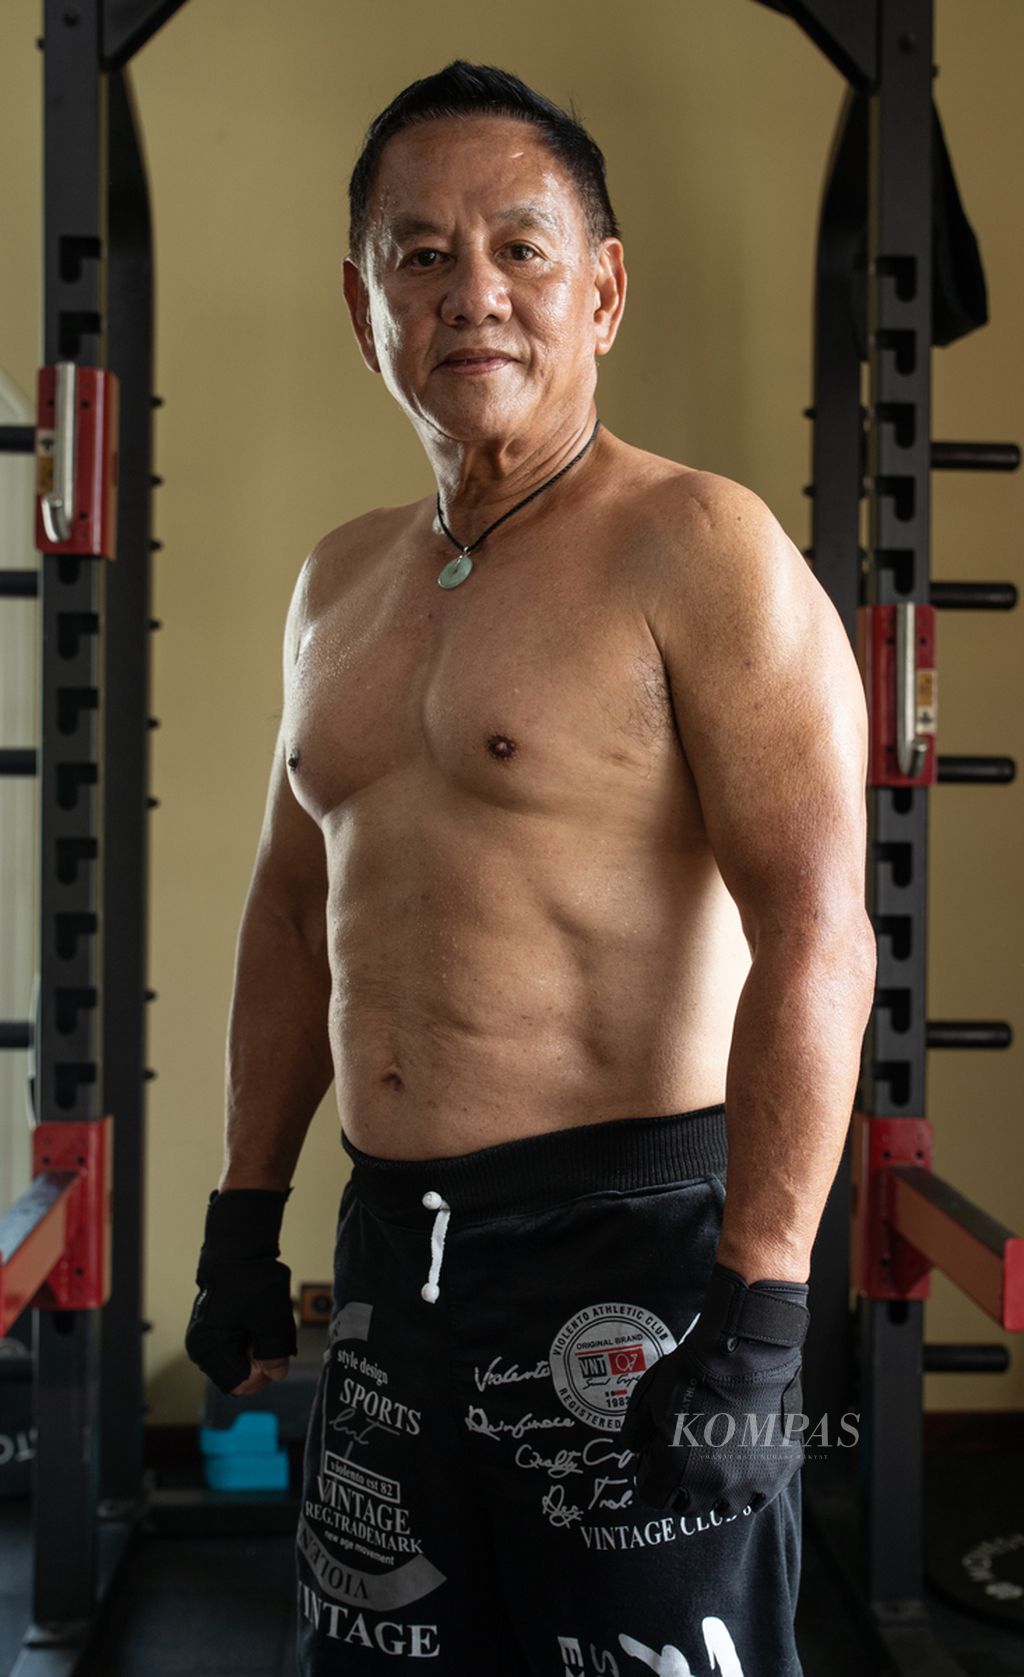 Usia Au Bintoro telah mencapai 70 tahun pada 2022. Pada usia itu, otot lengan dan perutnya masih kencang berkat olahraga gim secara rutin.